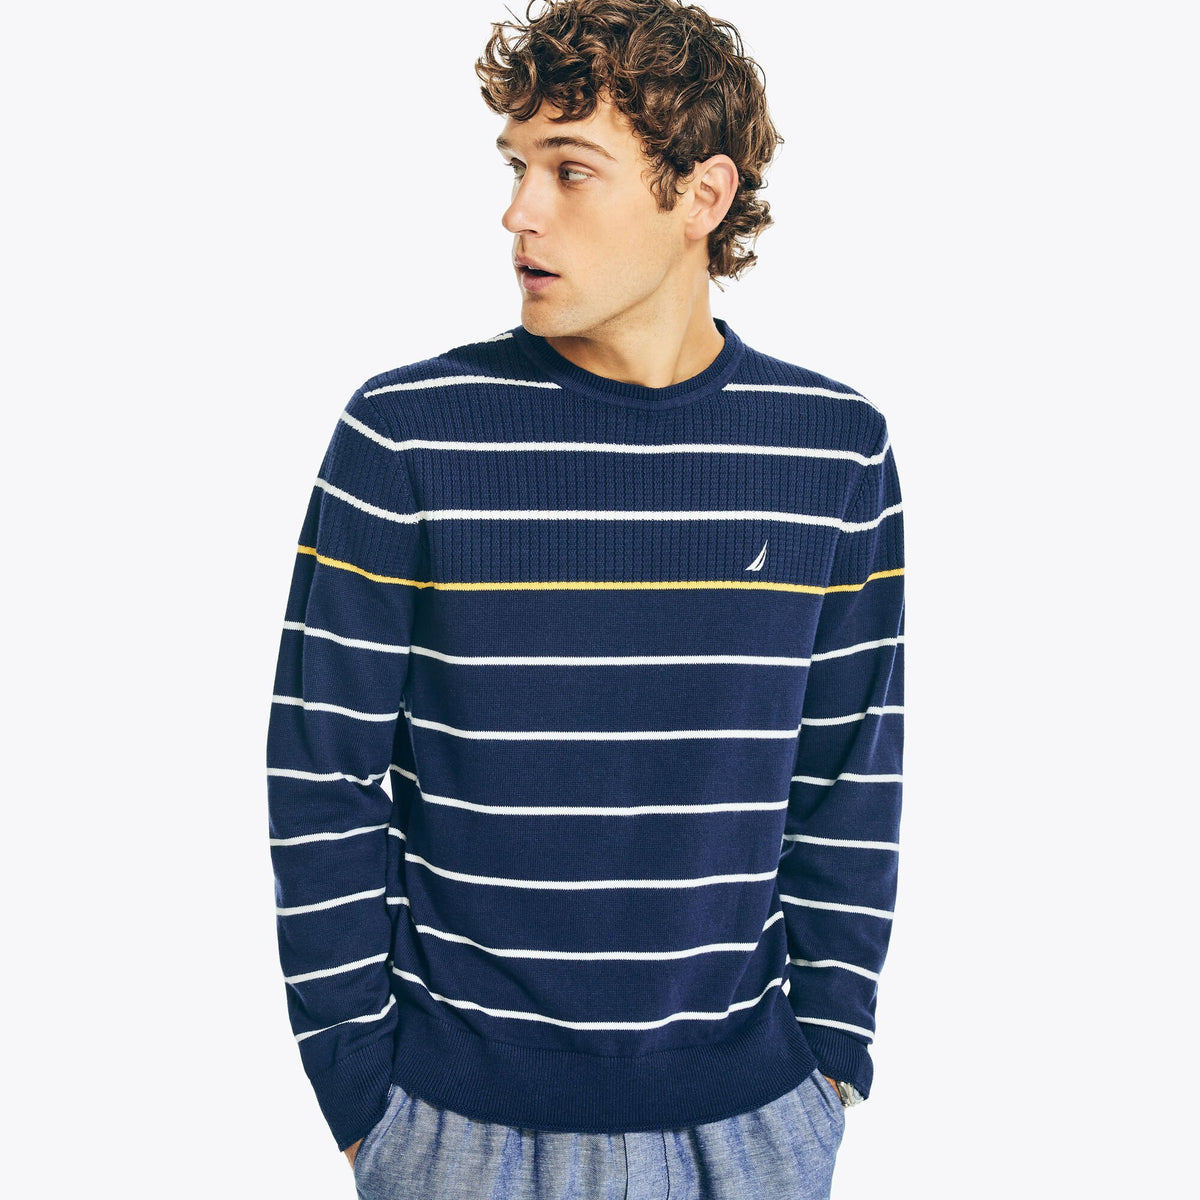 Nautica Men's Striped Textured Crewneck Sweater Stellar Blue Heather